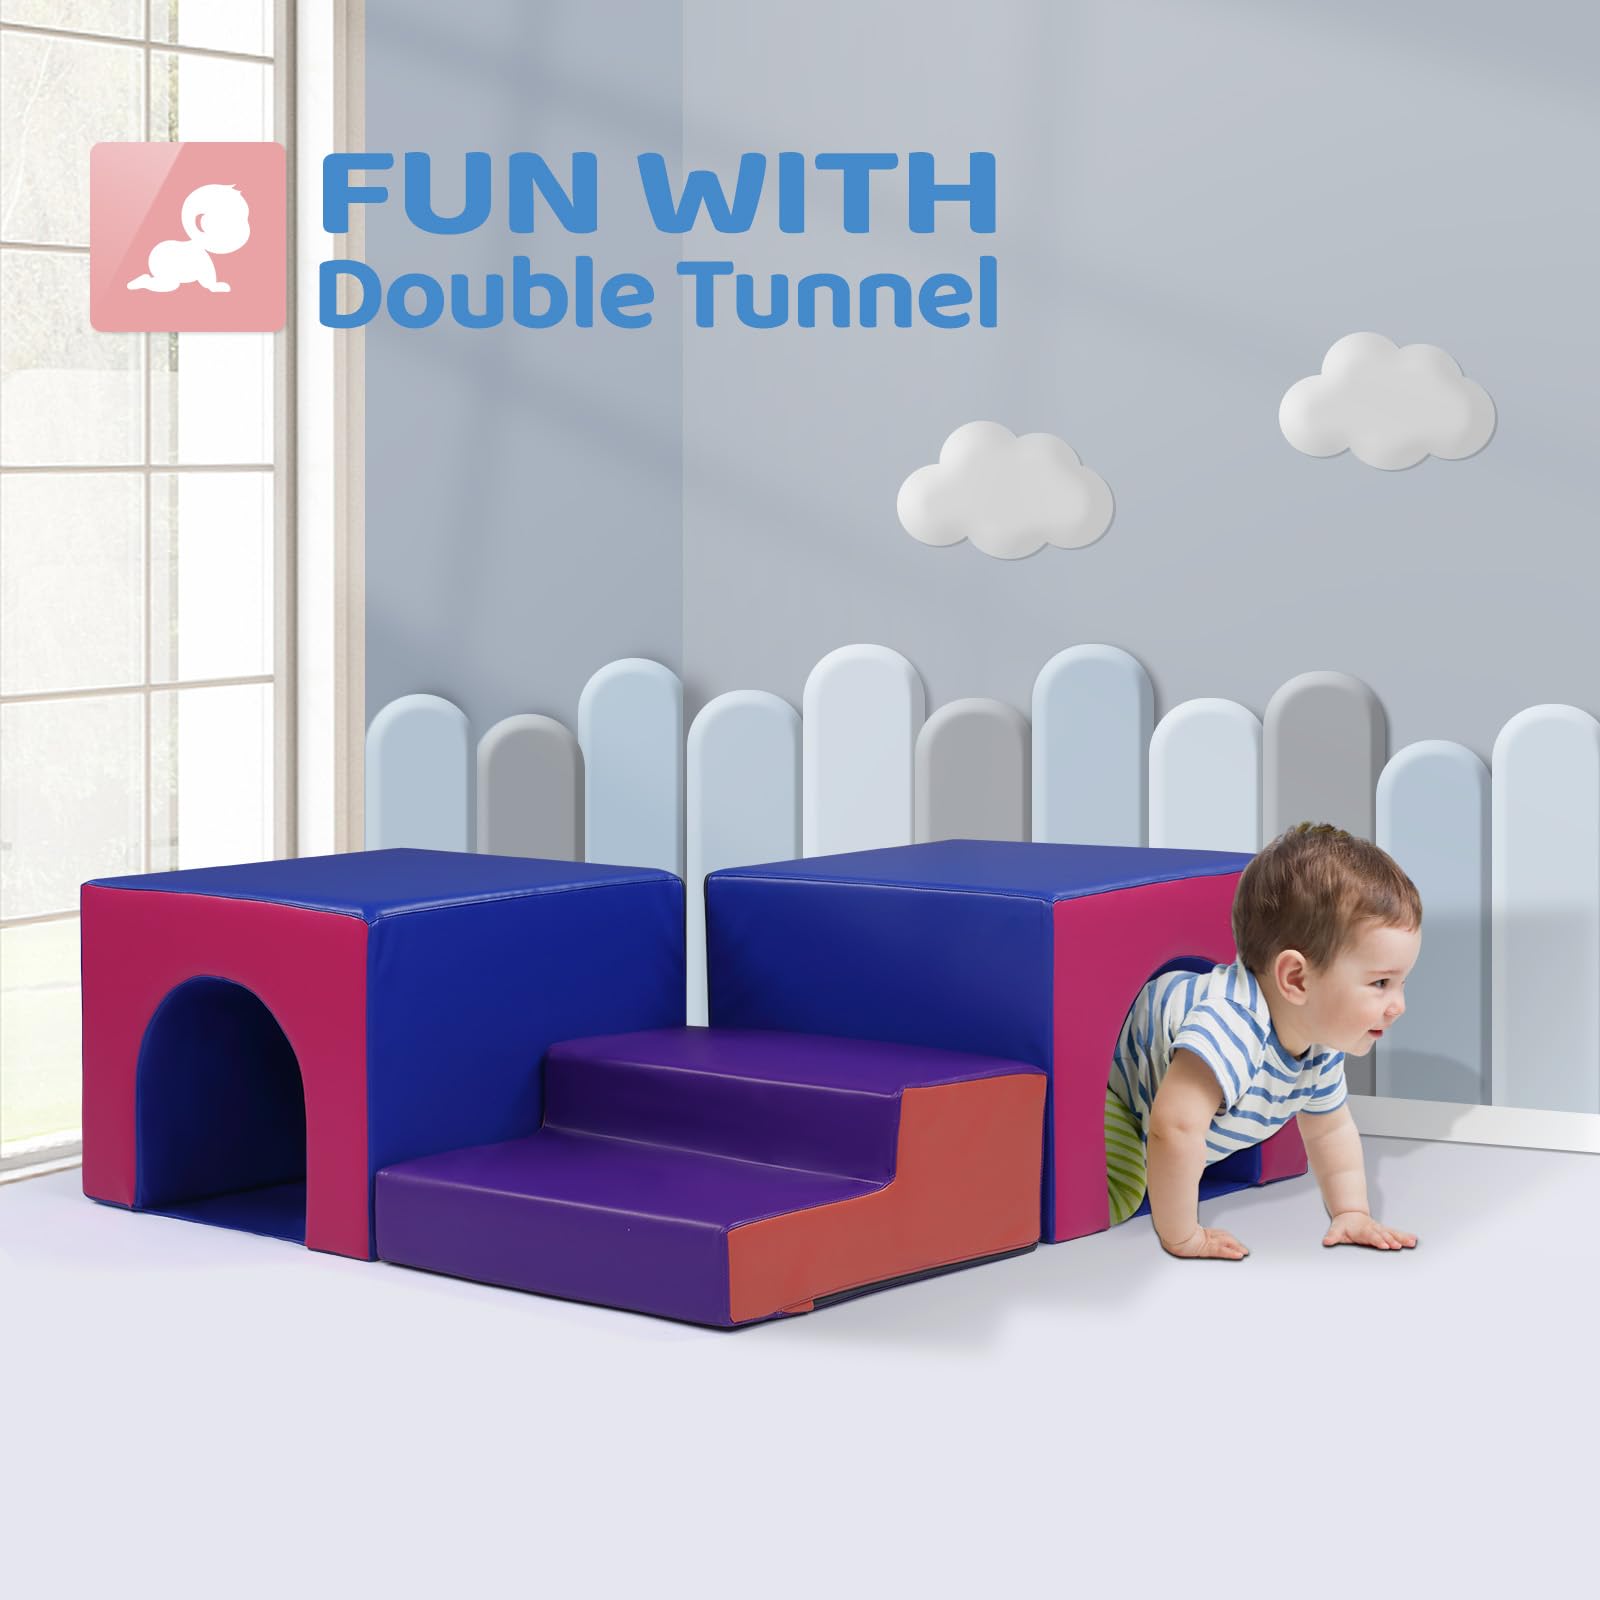 Best Choice Products 5-Piece Kids Climb & Crawl Soft Foam Block Playset Structures for Child Development Motor Skills